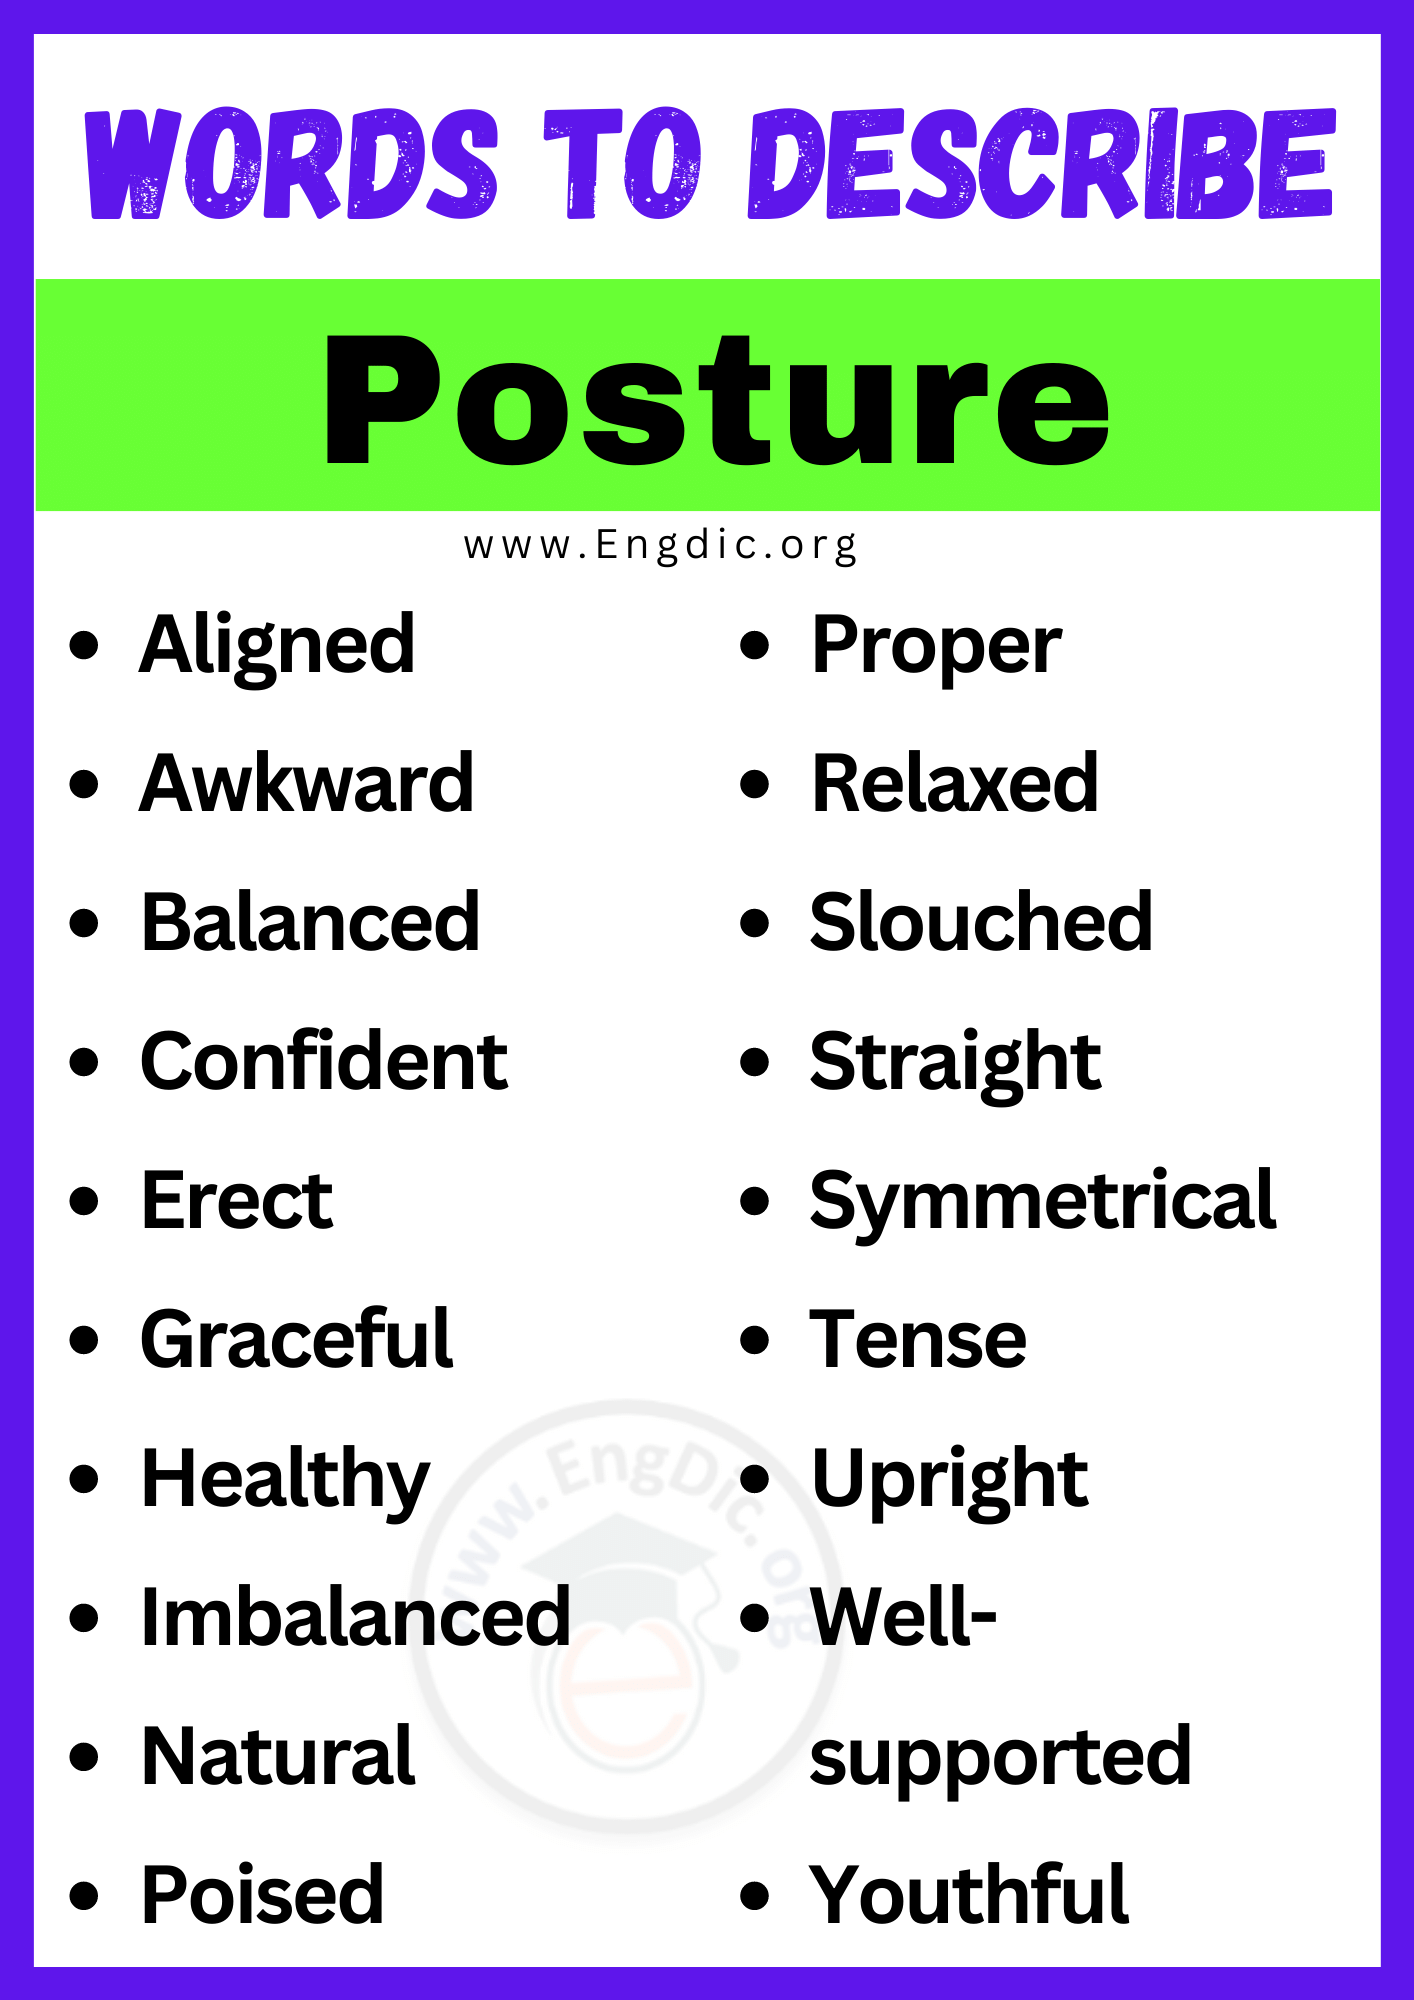 Words to Describe Posture